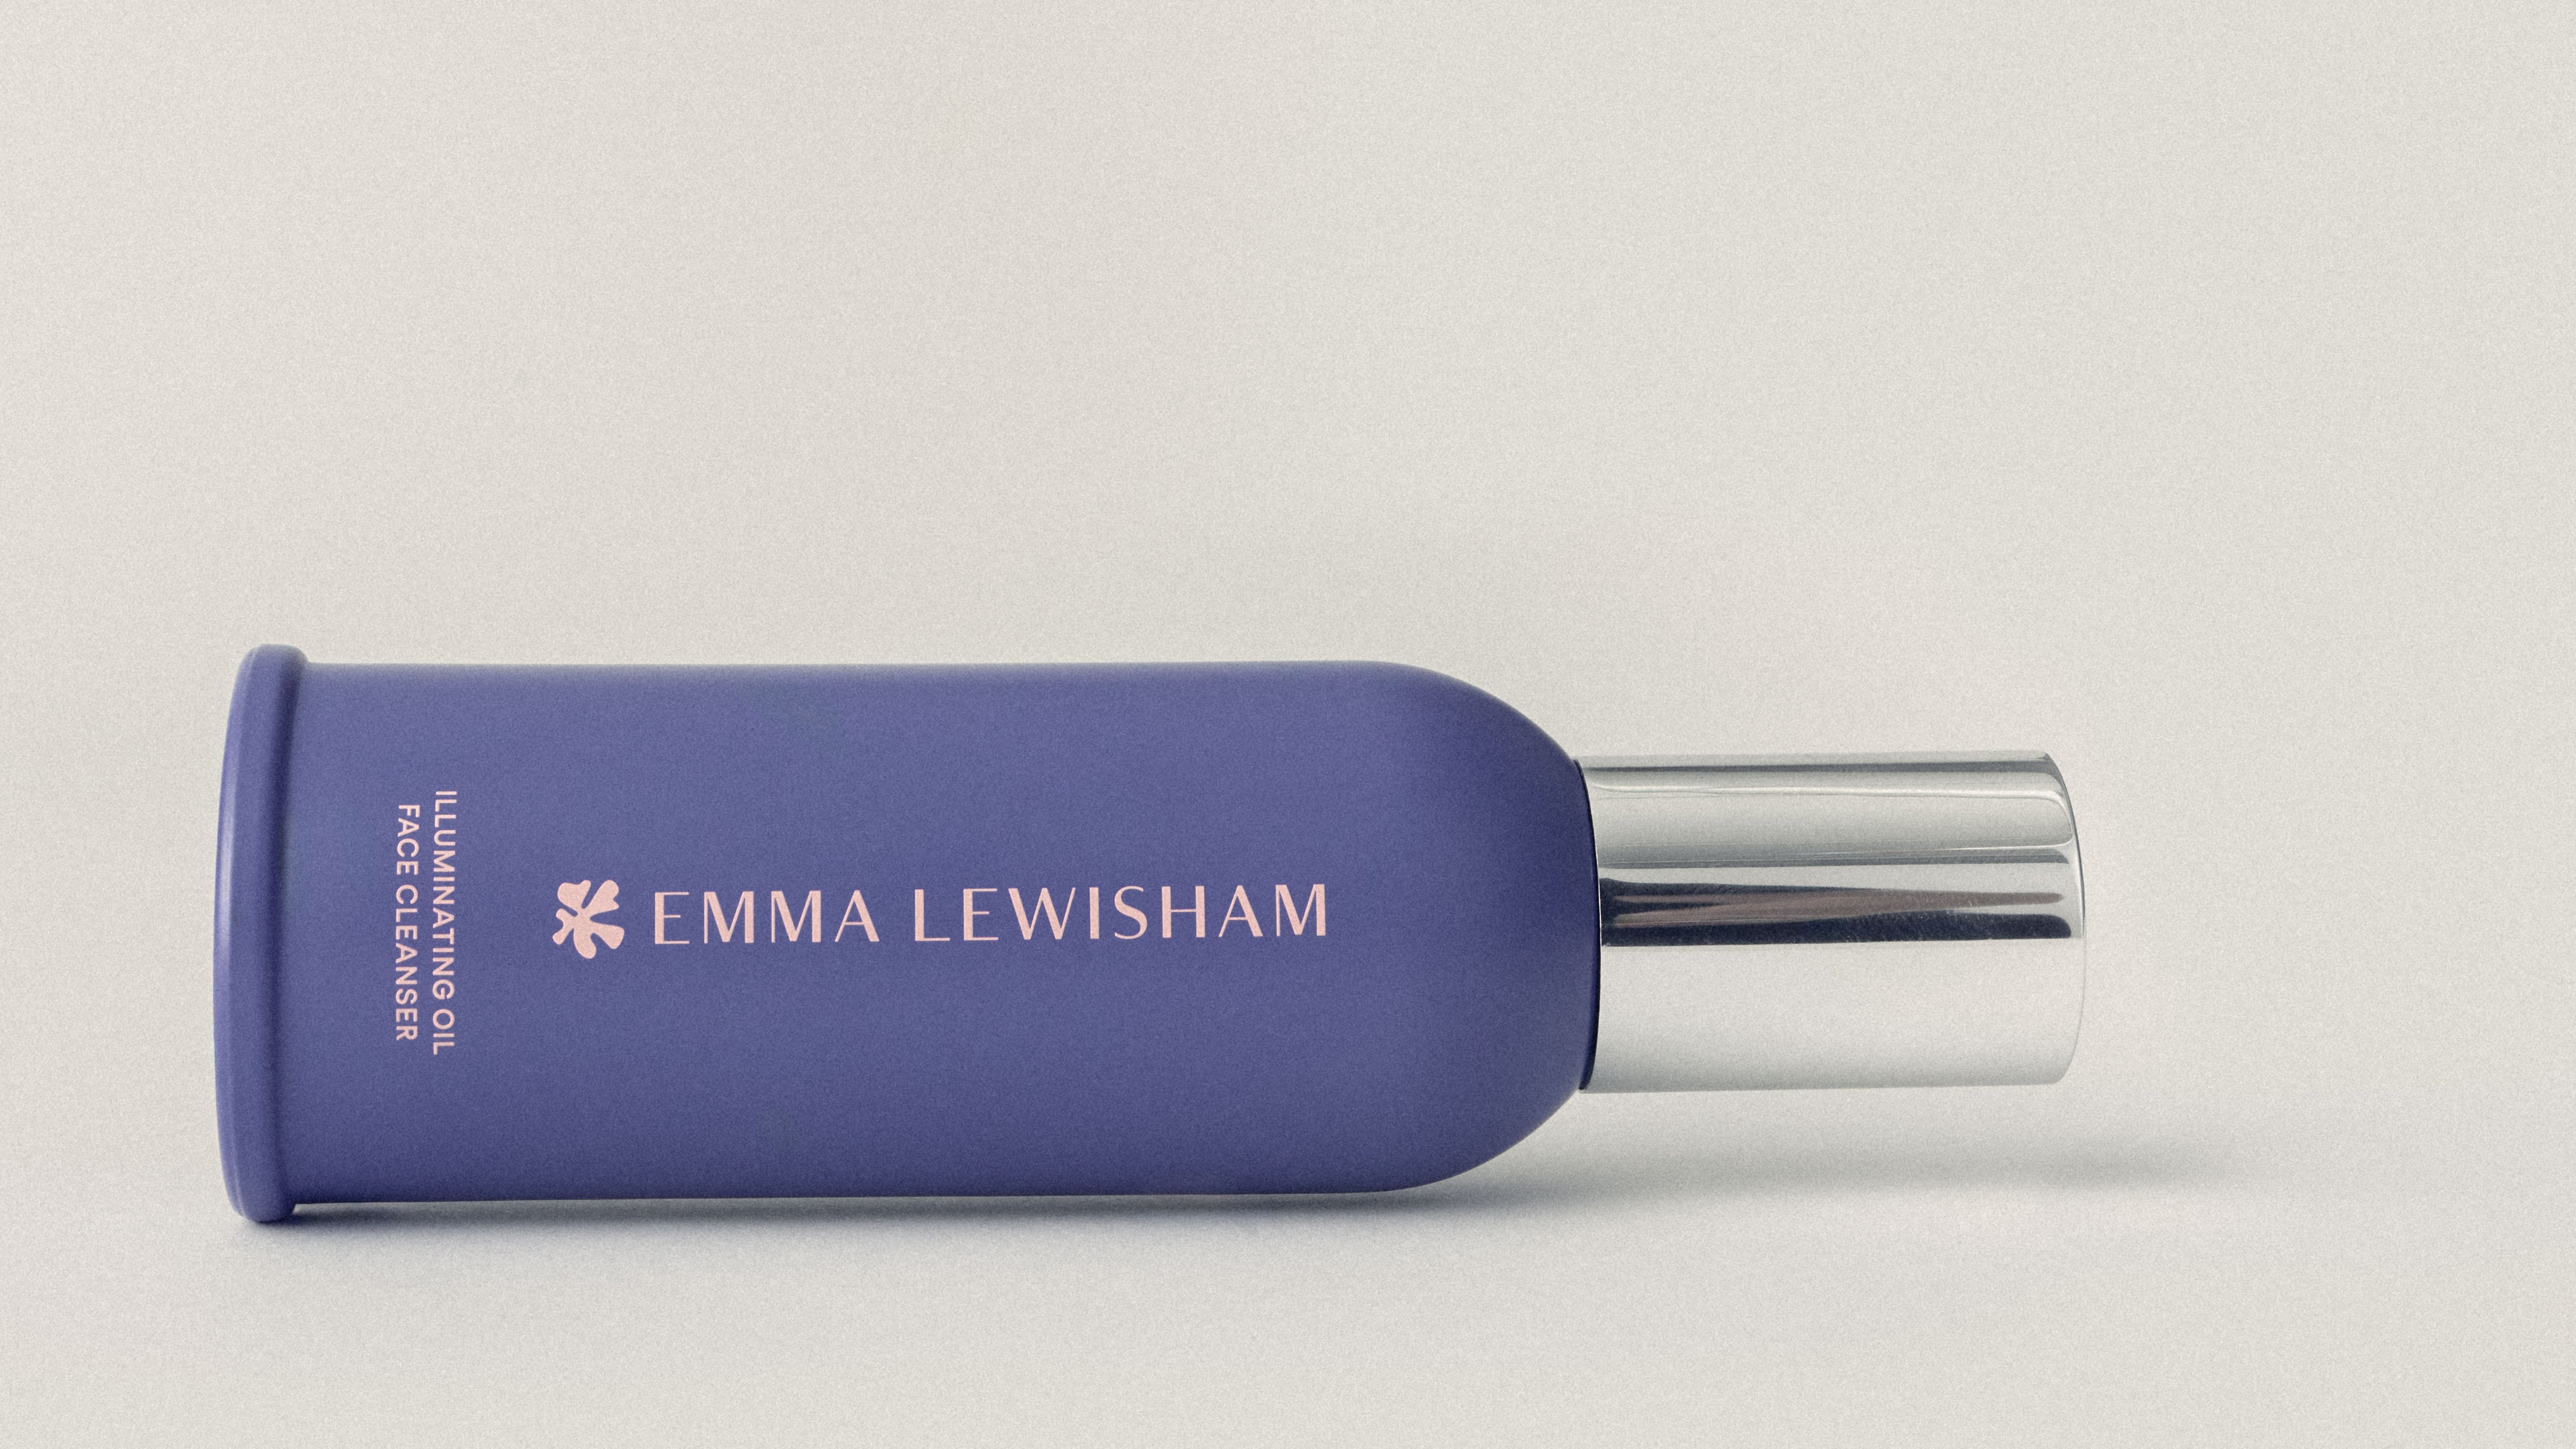 Emma Lewisham | All Products